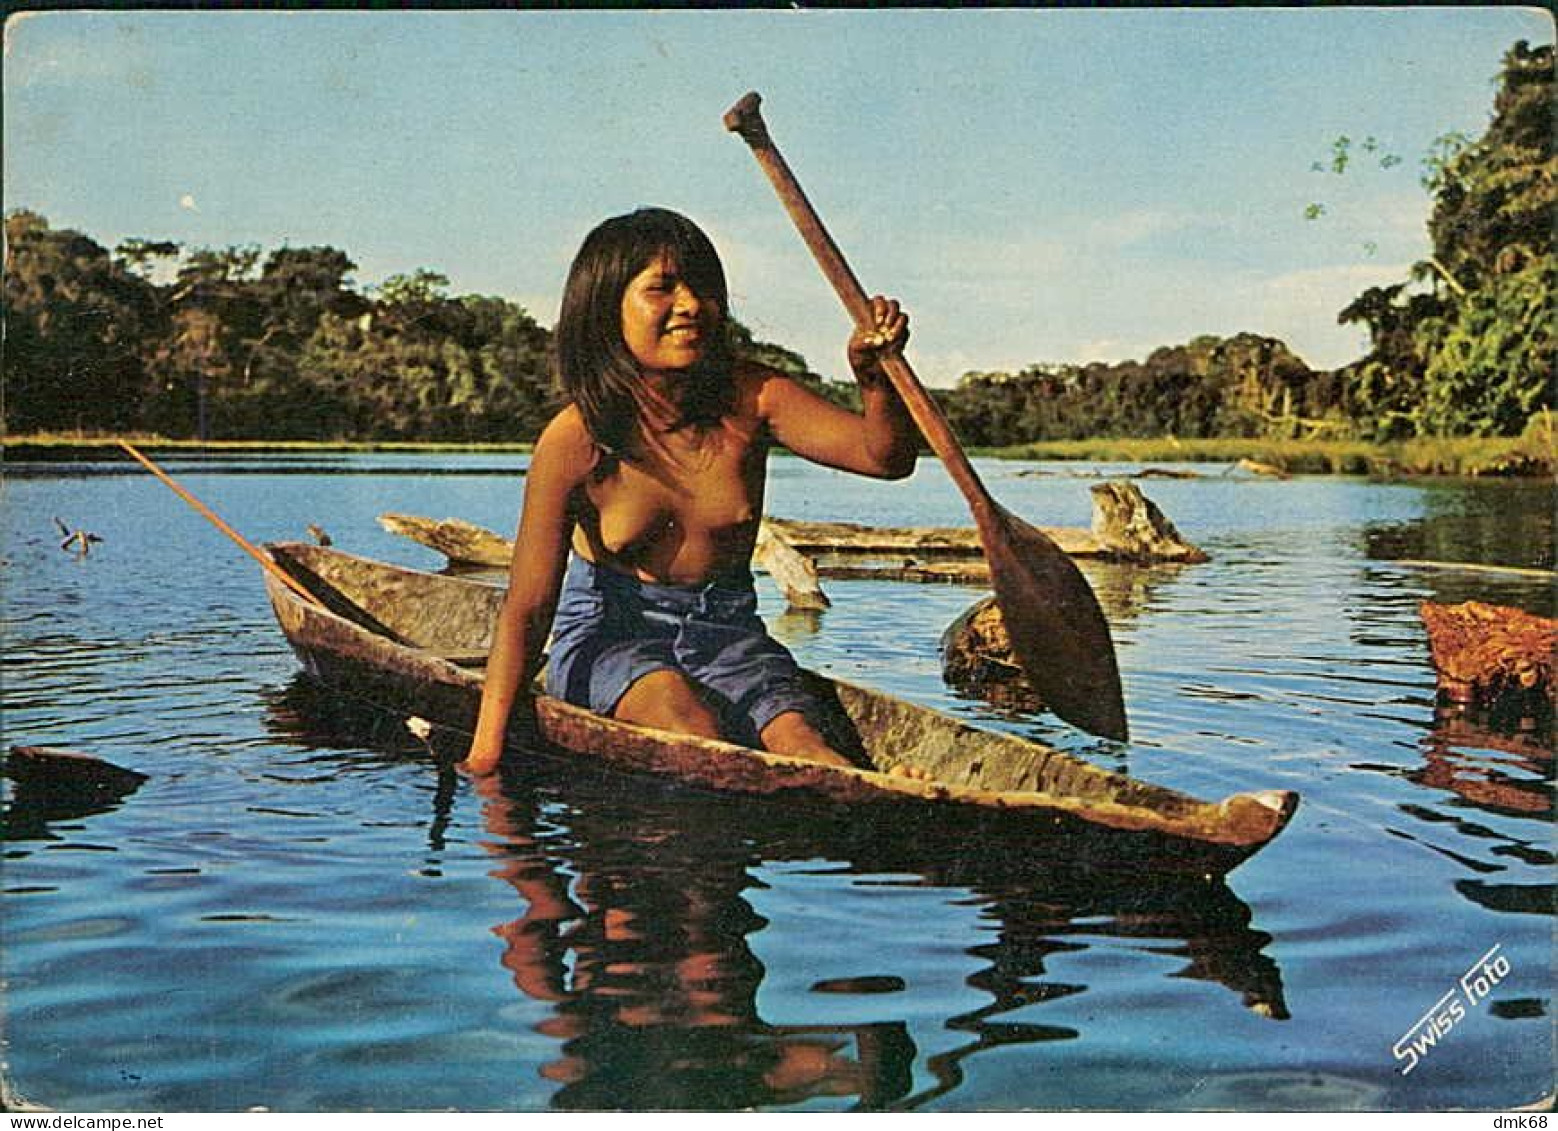 PERU - AMAZON JUNGLE - HALF NAKED / NUDE / NU JIBARO GIRL IN A CANOE - MAILED 1979 / RED POSTMARK (18045) - America